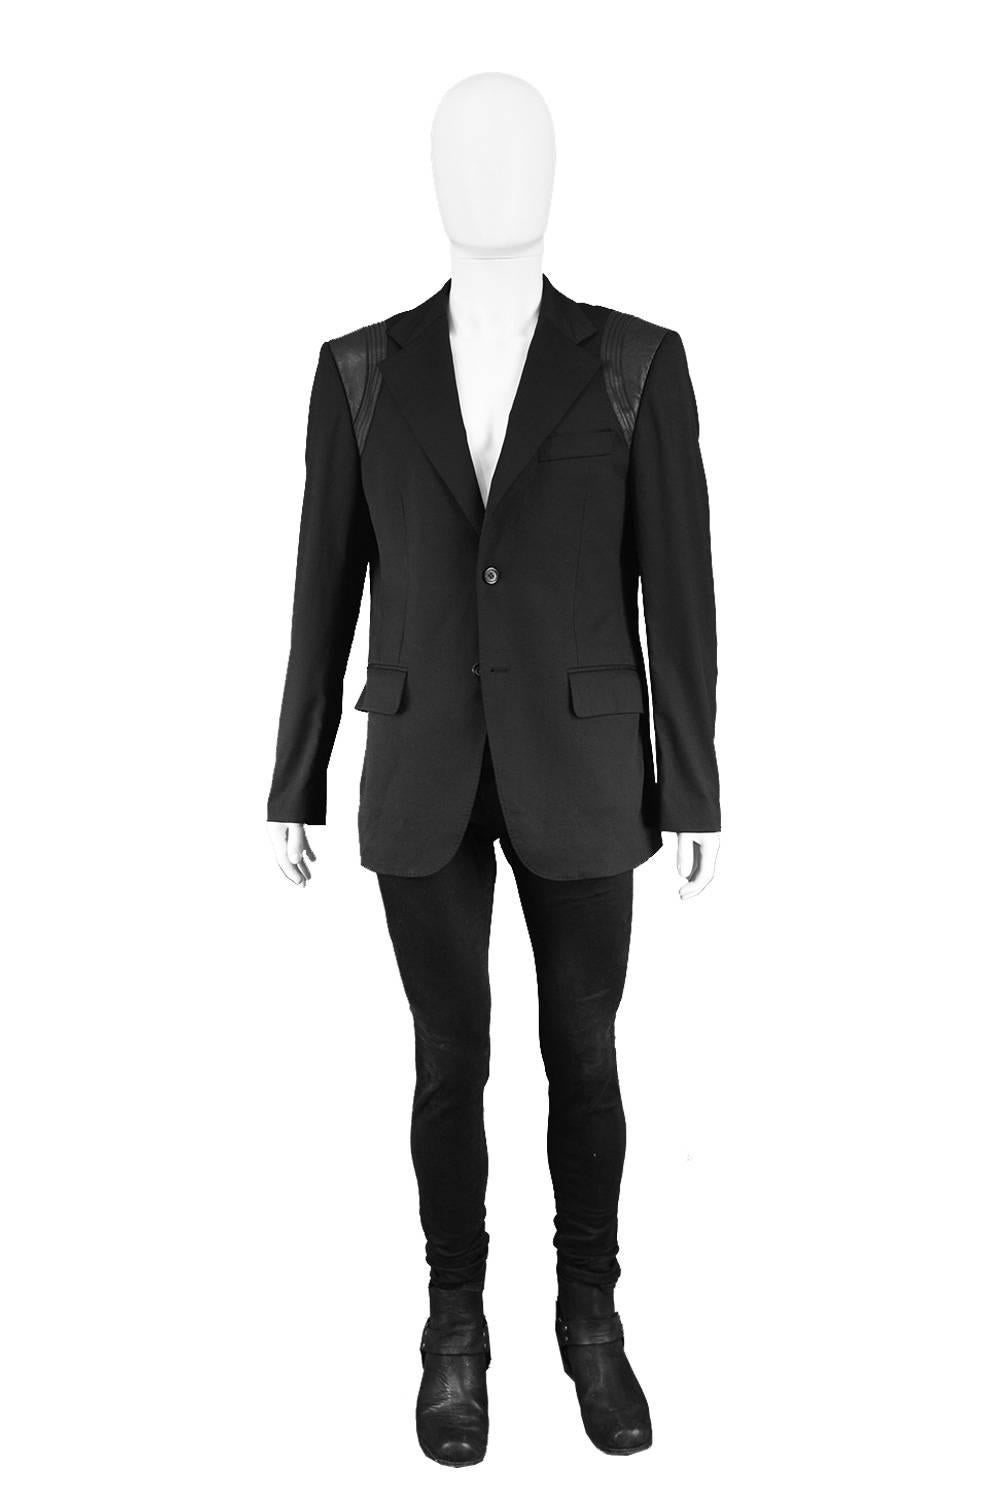 John Richmond Men's Blazer Jacket with Black Leather Shoulder Panels

Size: Marked I 52 Which is roughly a men’s Large. Please check measurements.
Chest - 42” / 106cm
Waist - 38” / 96cm
Length (Shoulder to Hem) - 29” / 73cm
Shoulder to Shoulder -